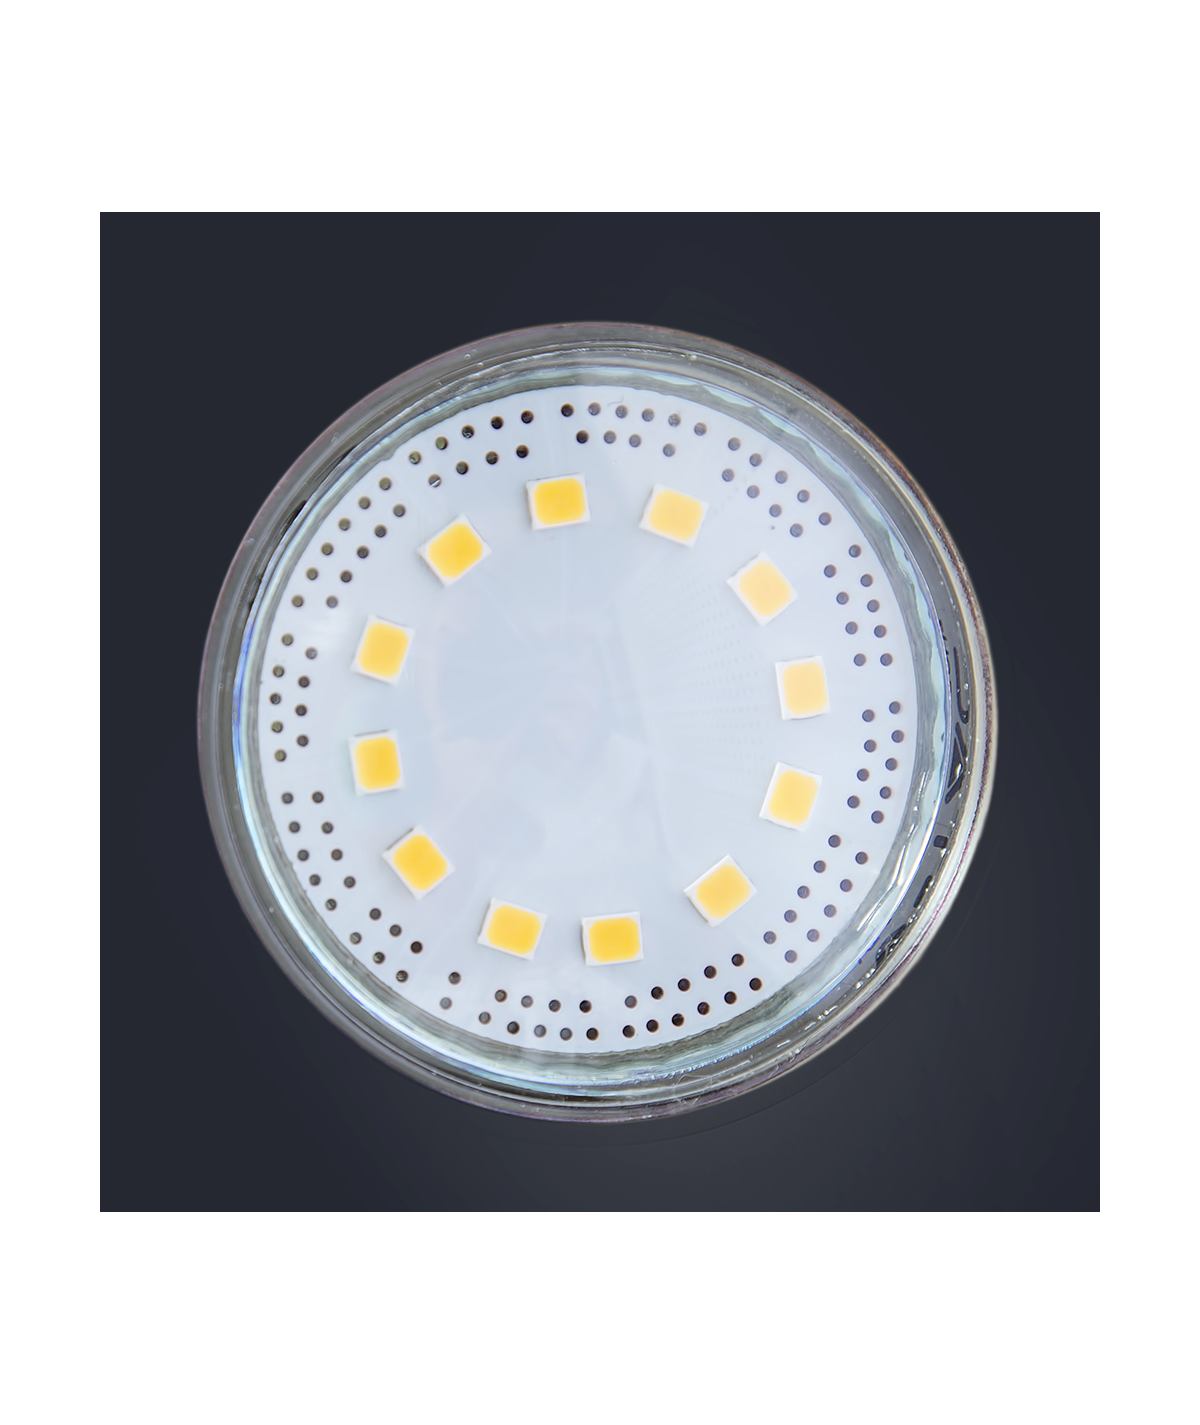 Кухонная вытяжка Perfelli T 9612 A 1000 BL LED характеристики - фотография 7